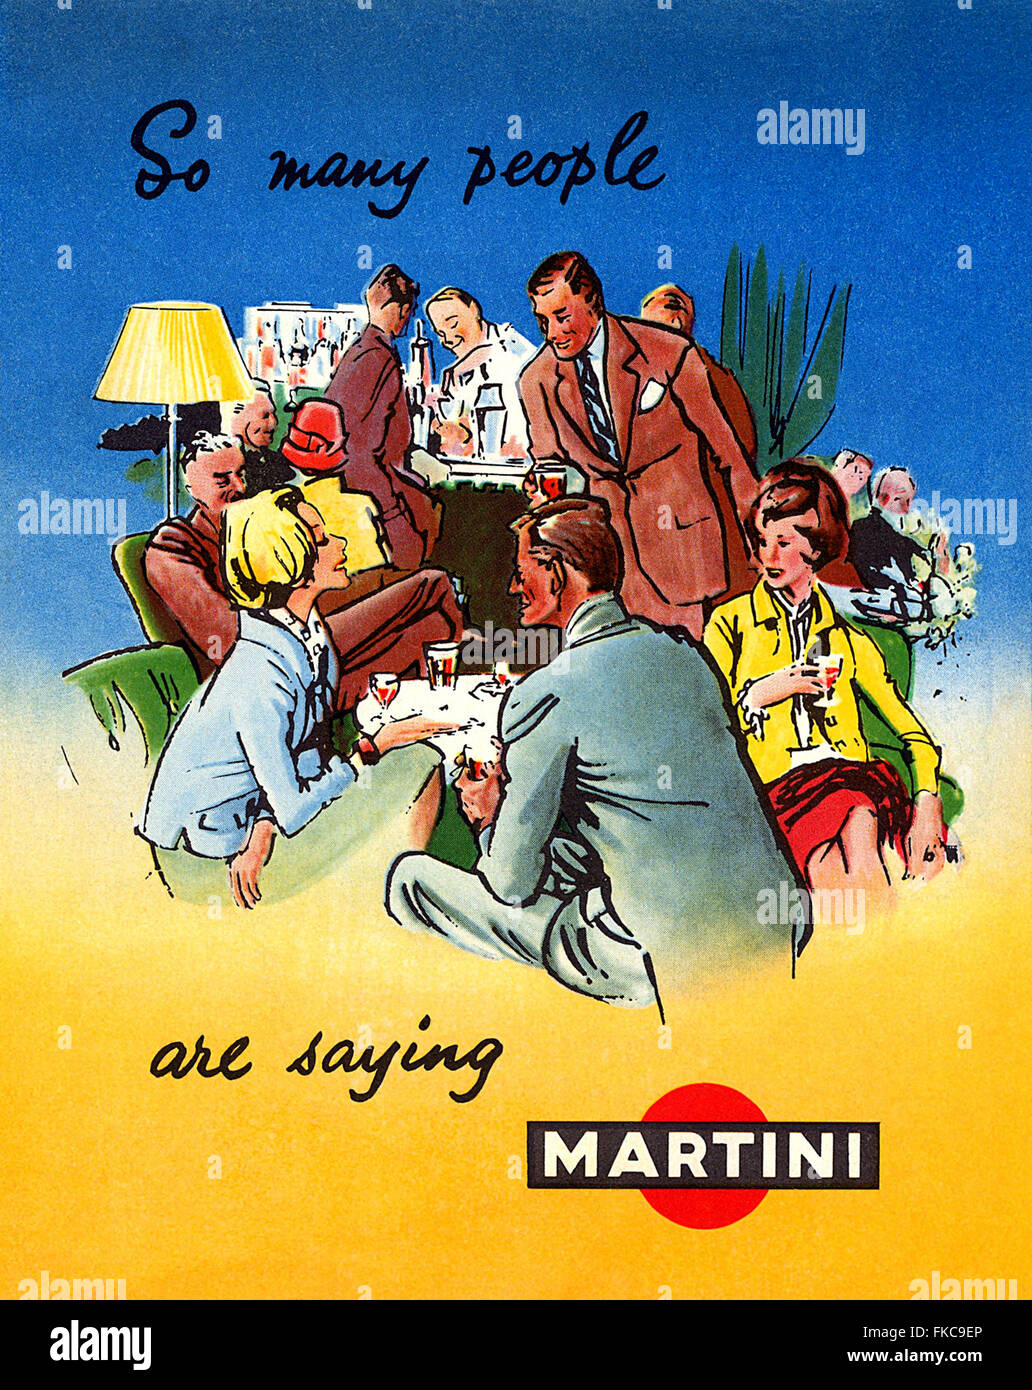 USA-Martini-Magazin-Werbung Stockfoto